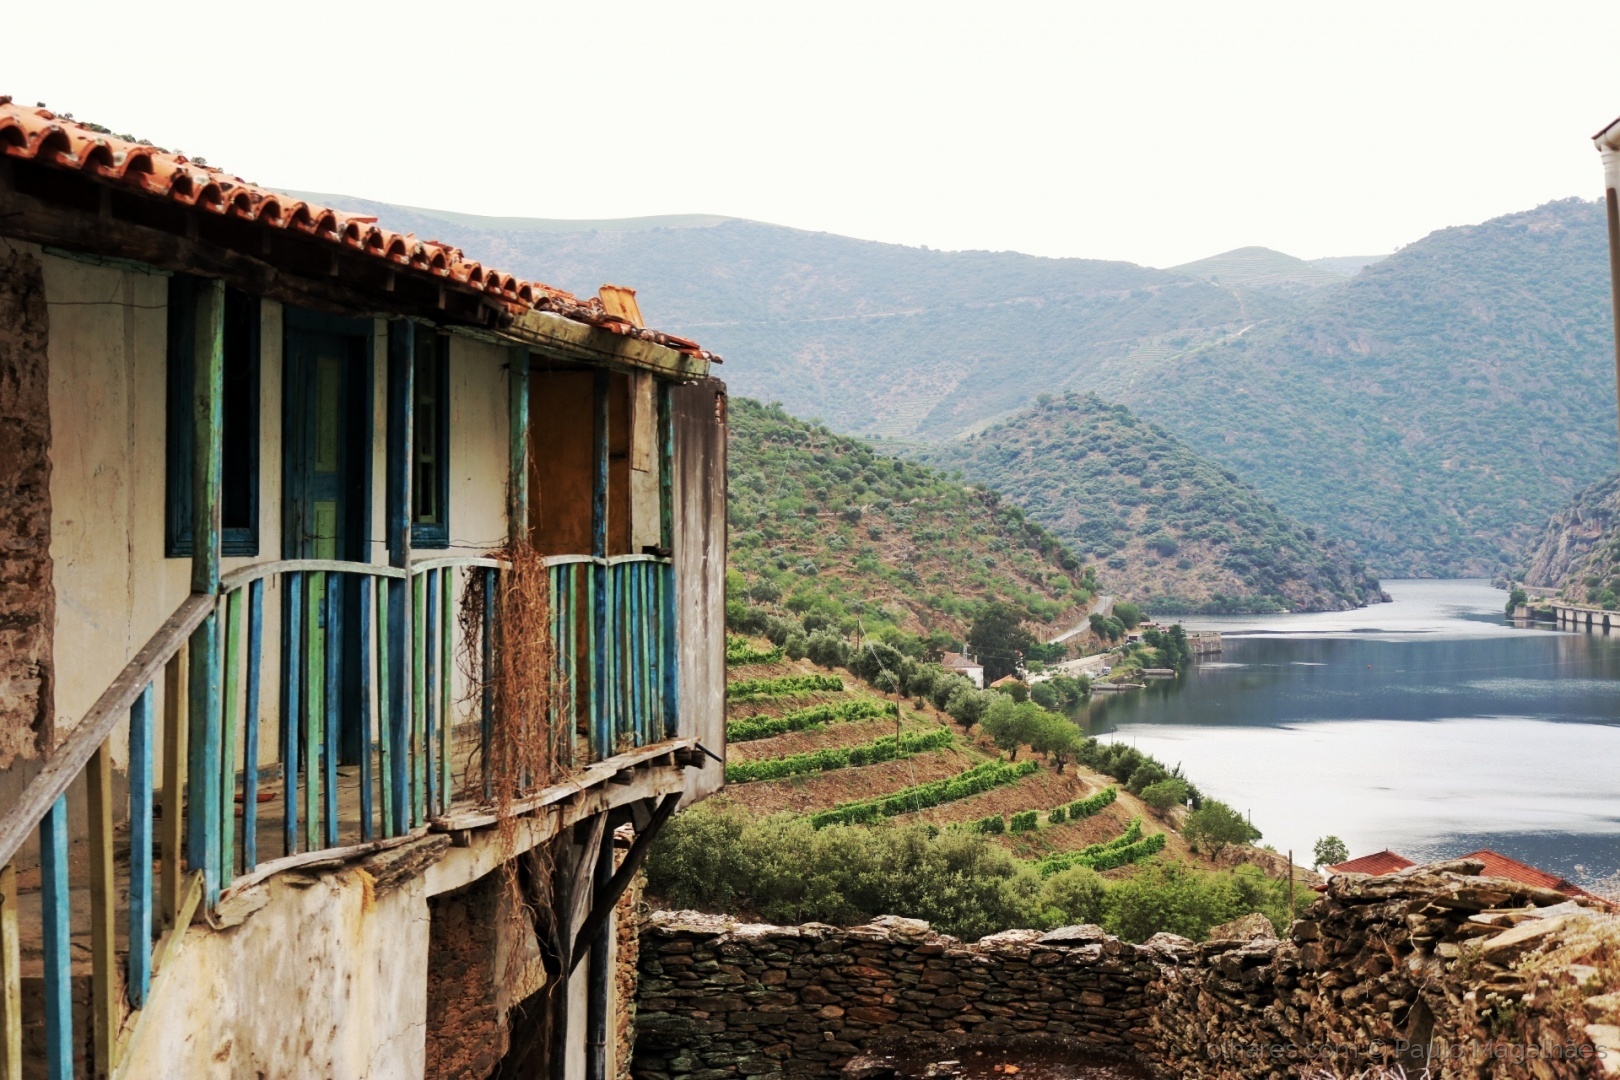 São xisto, Douro Valley, Portugal 